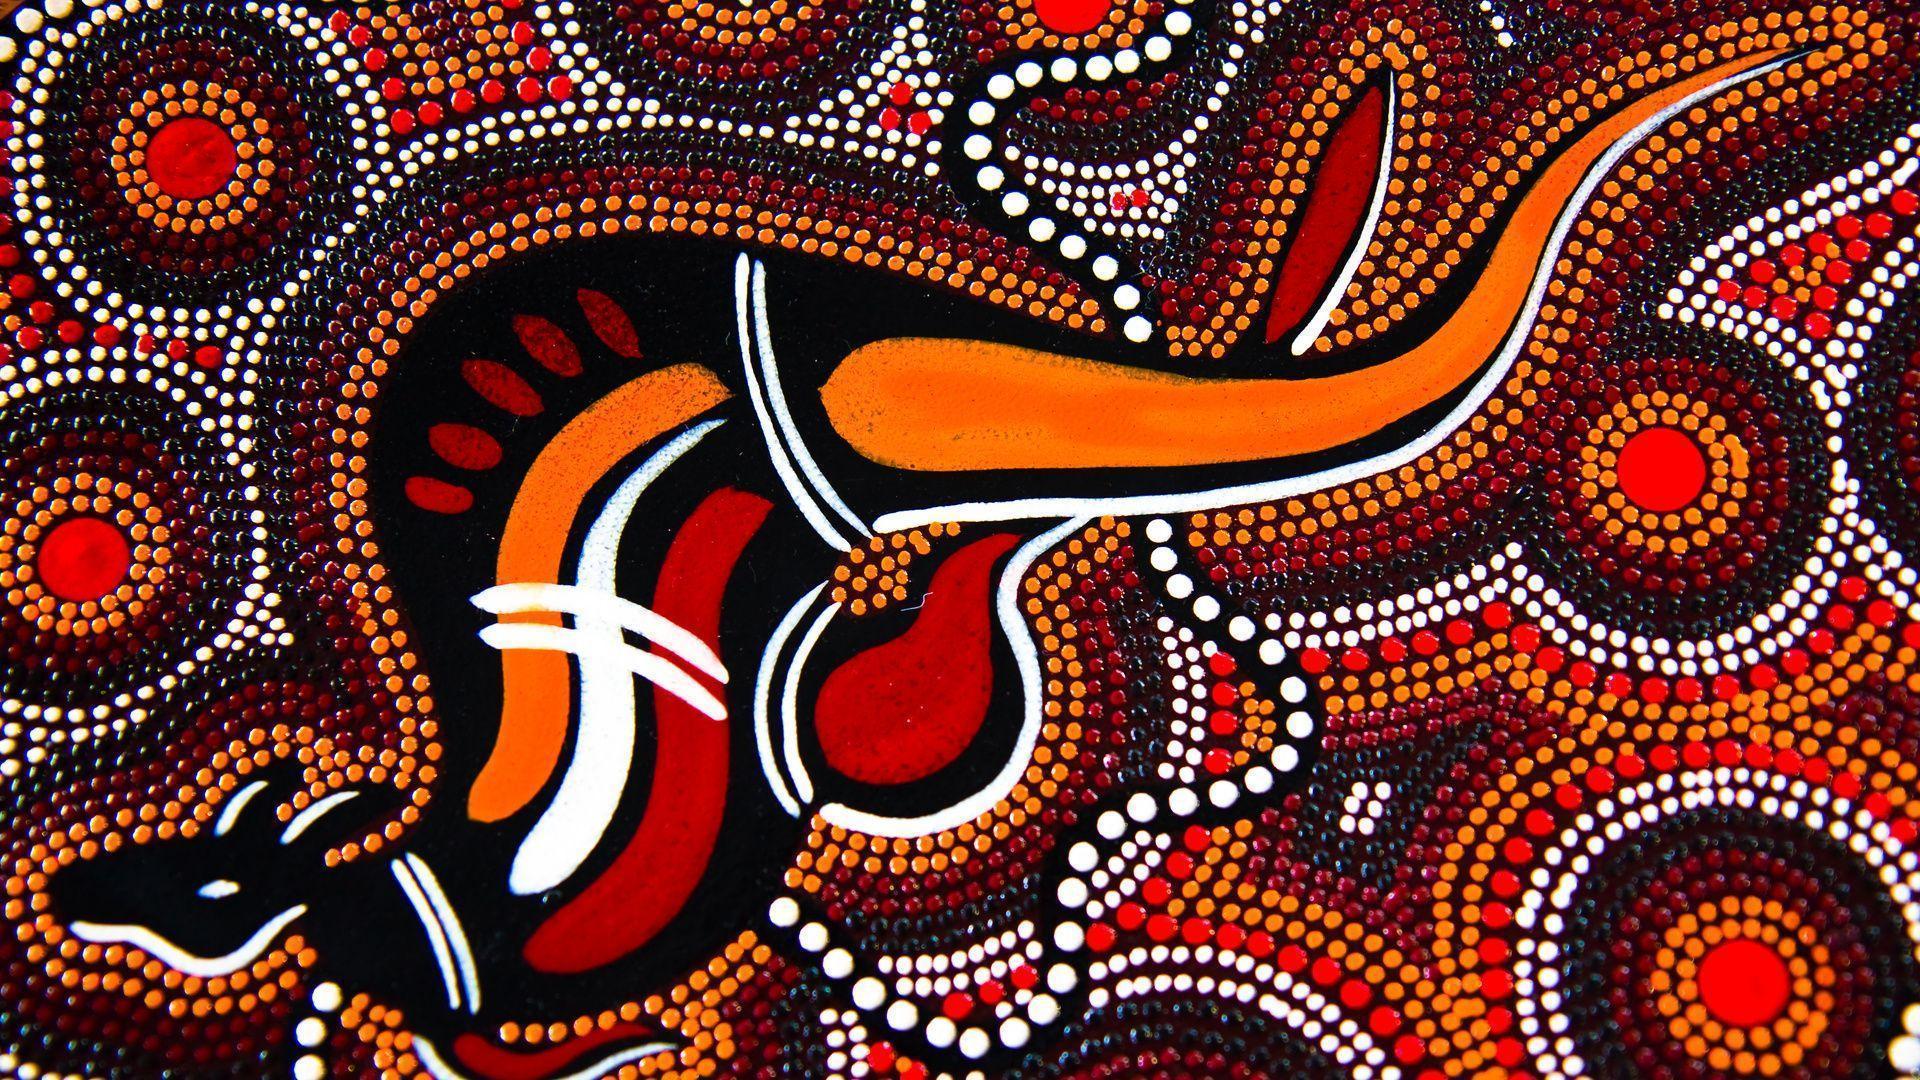 25 Outstanding aboriginal art desktop wallpaper You Can Save It free ...